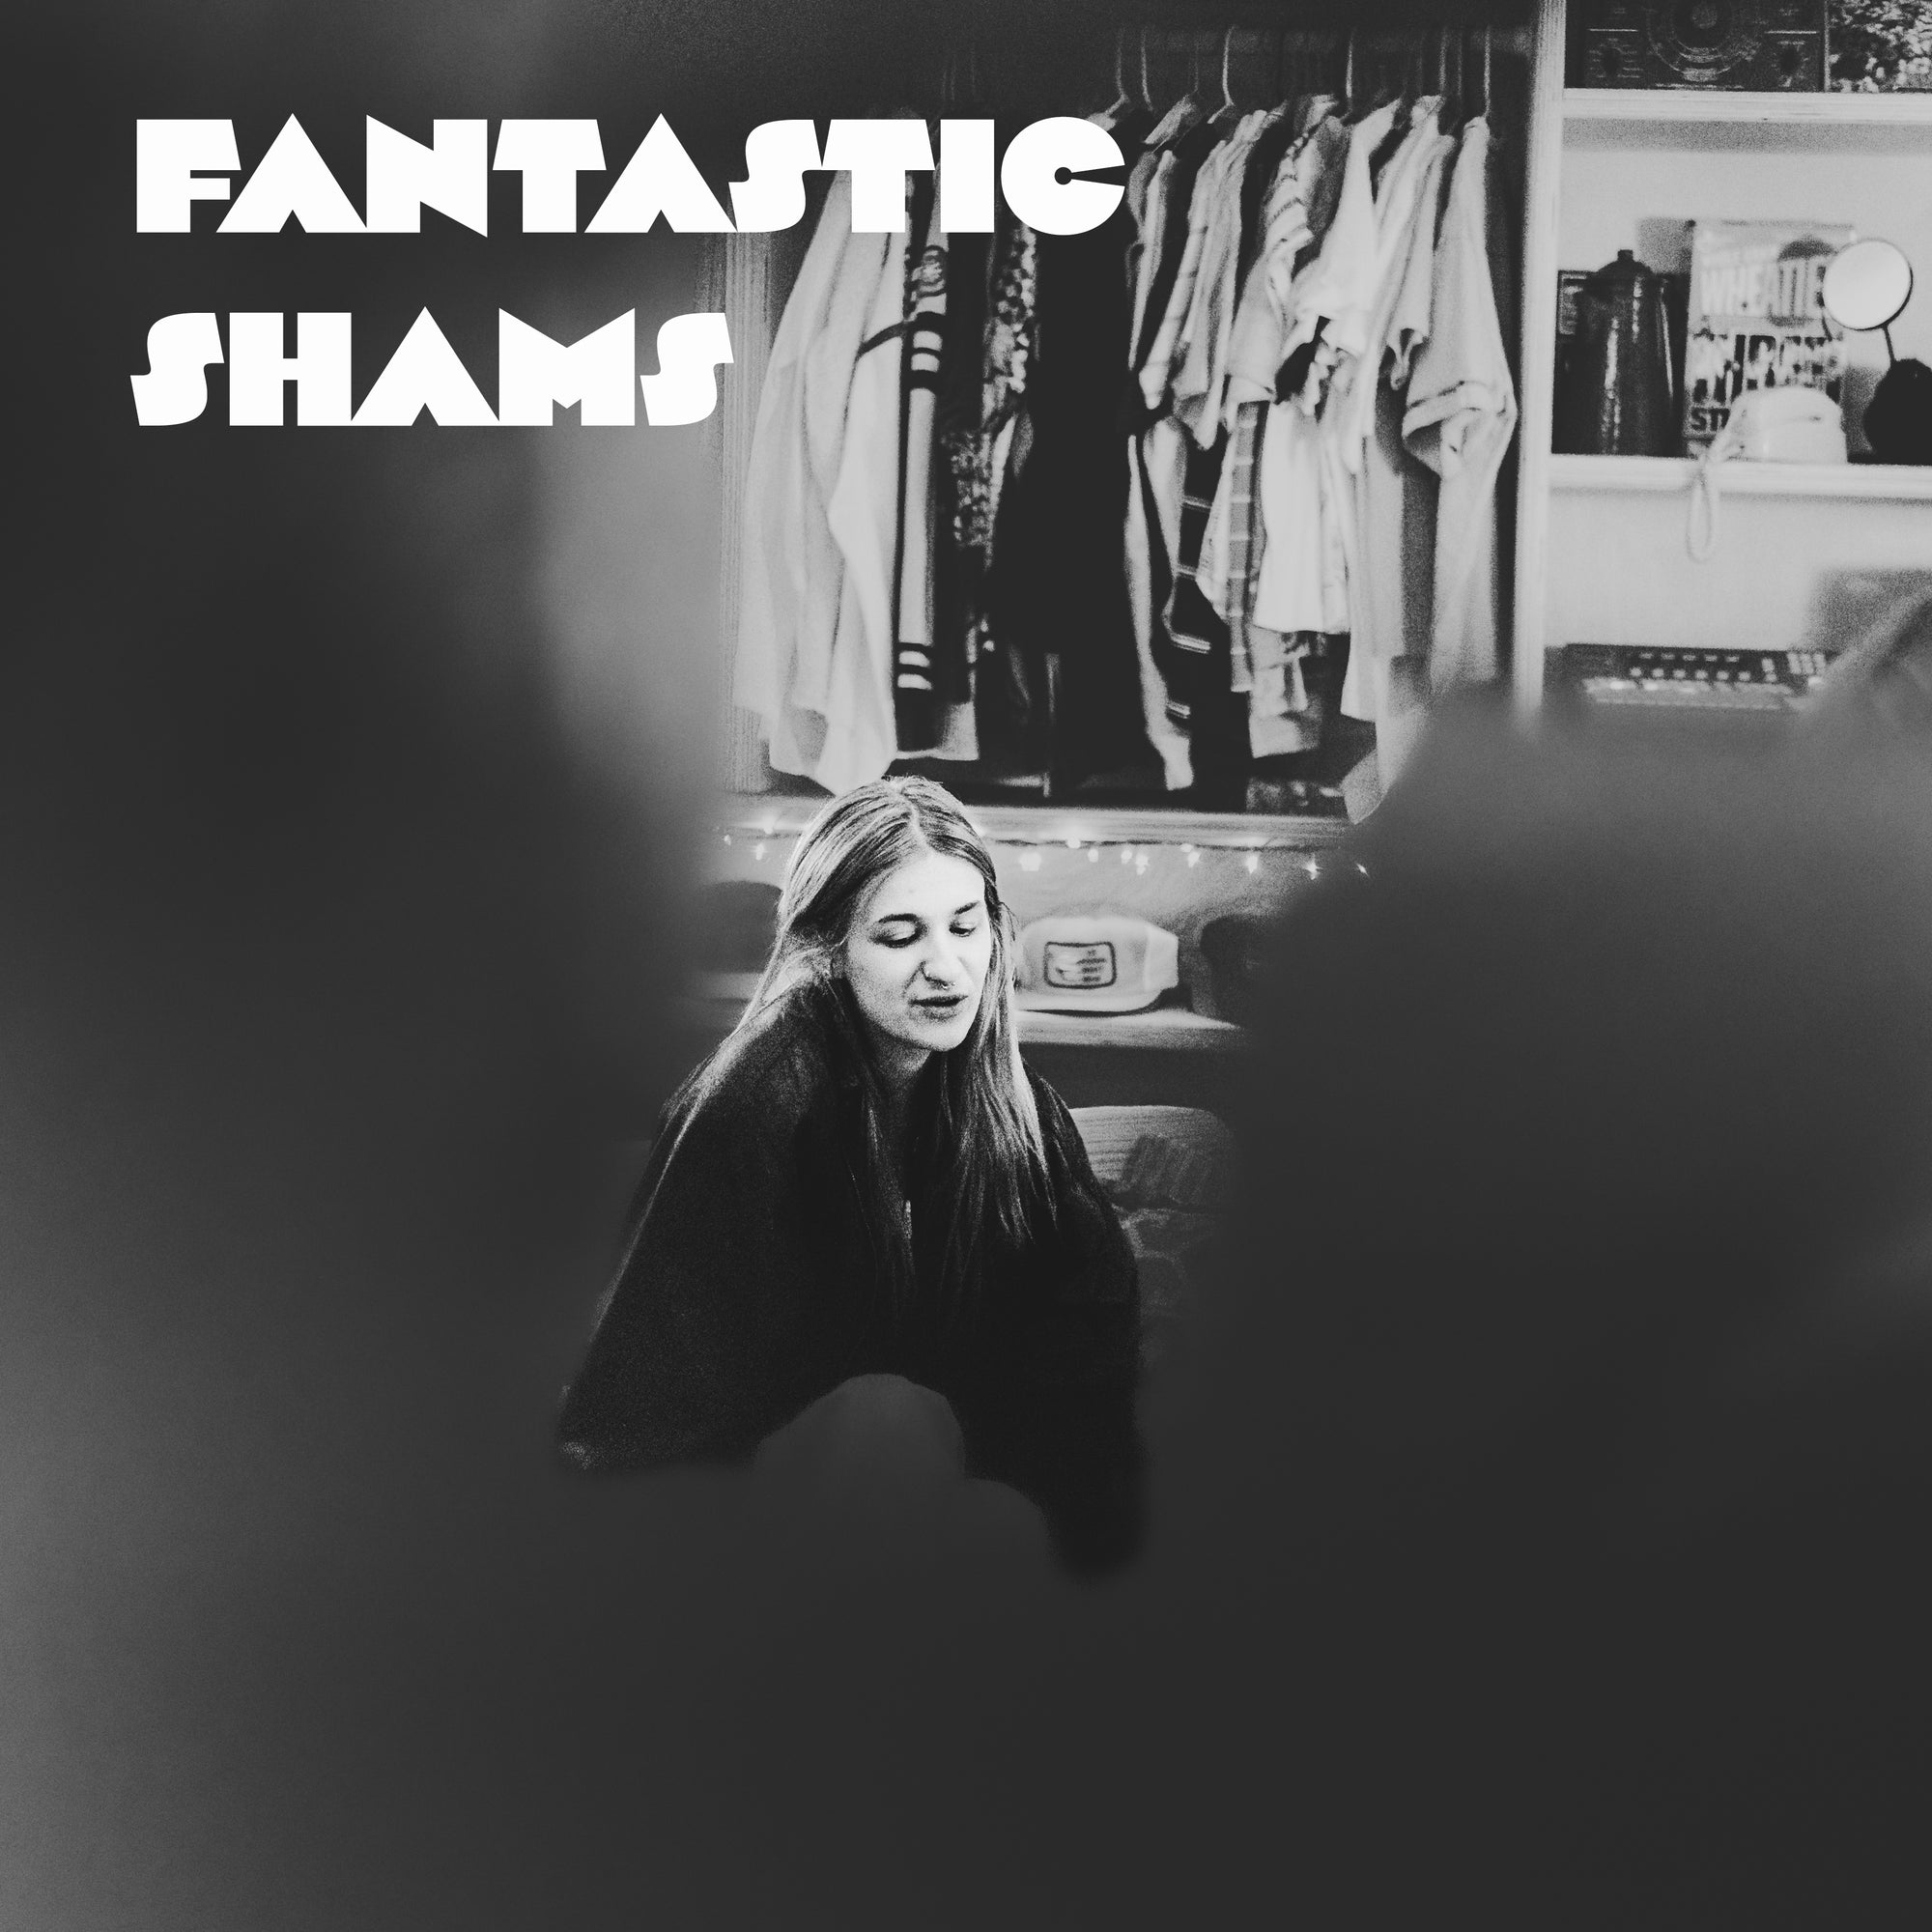 Fantastic Shams release their electrifying debut album